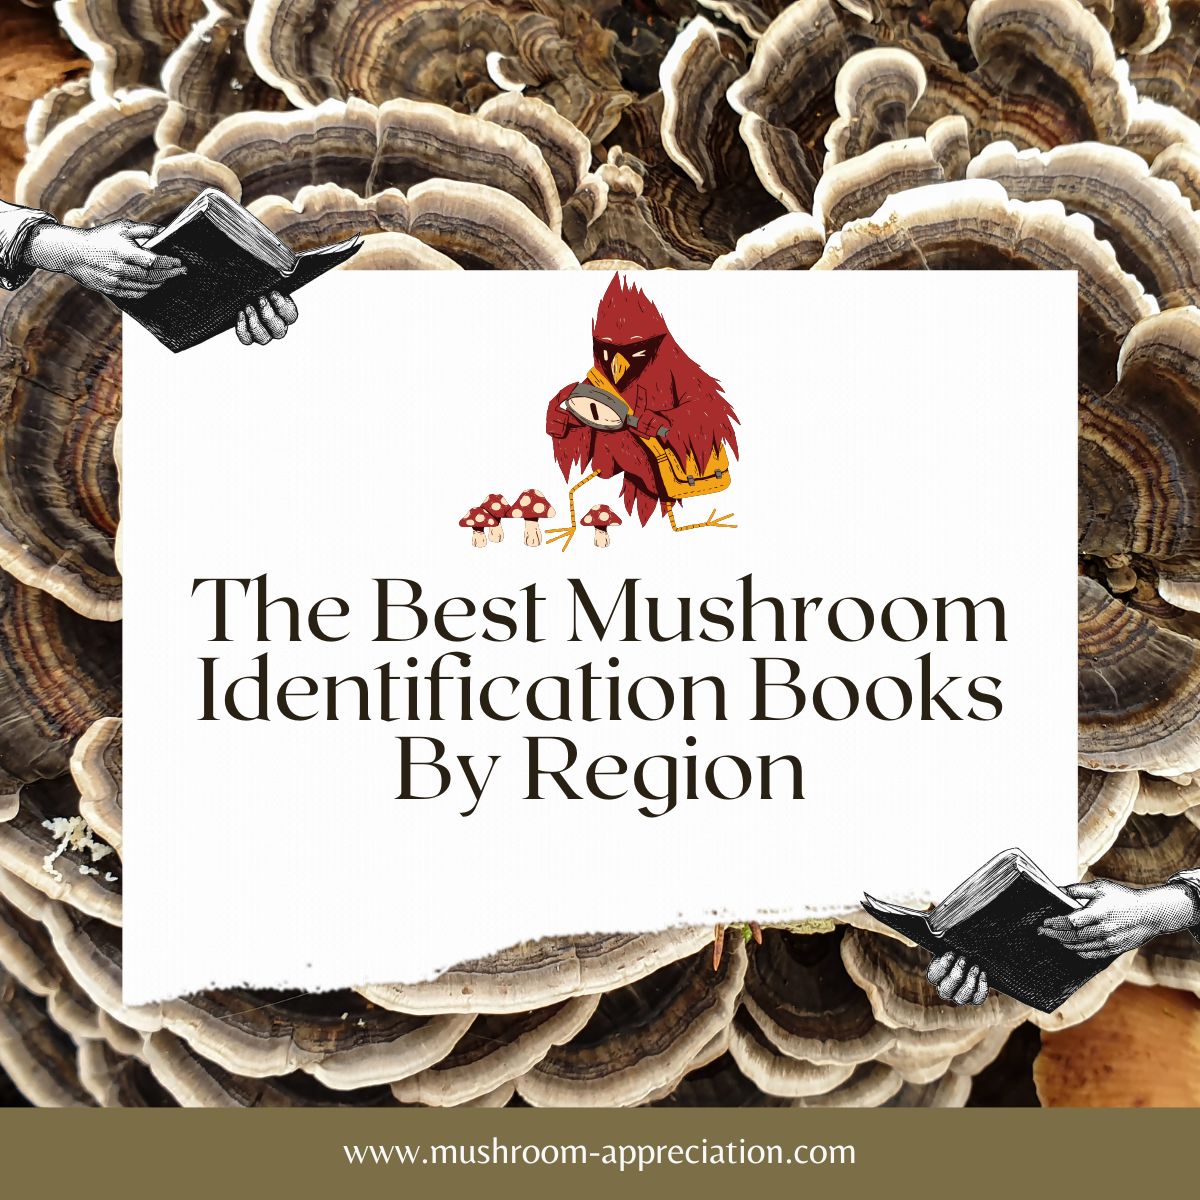 The Best Mushroom Identification Books BY Region